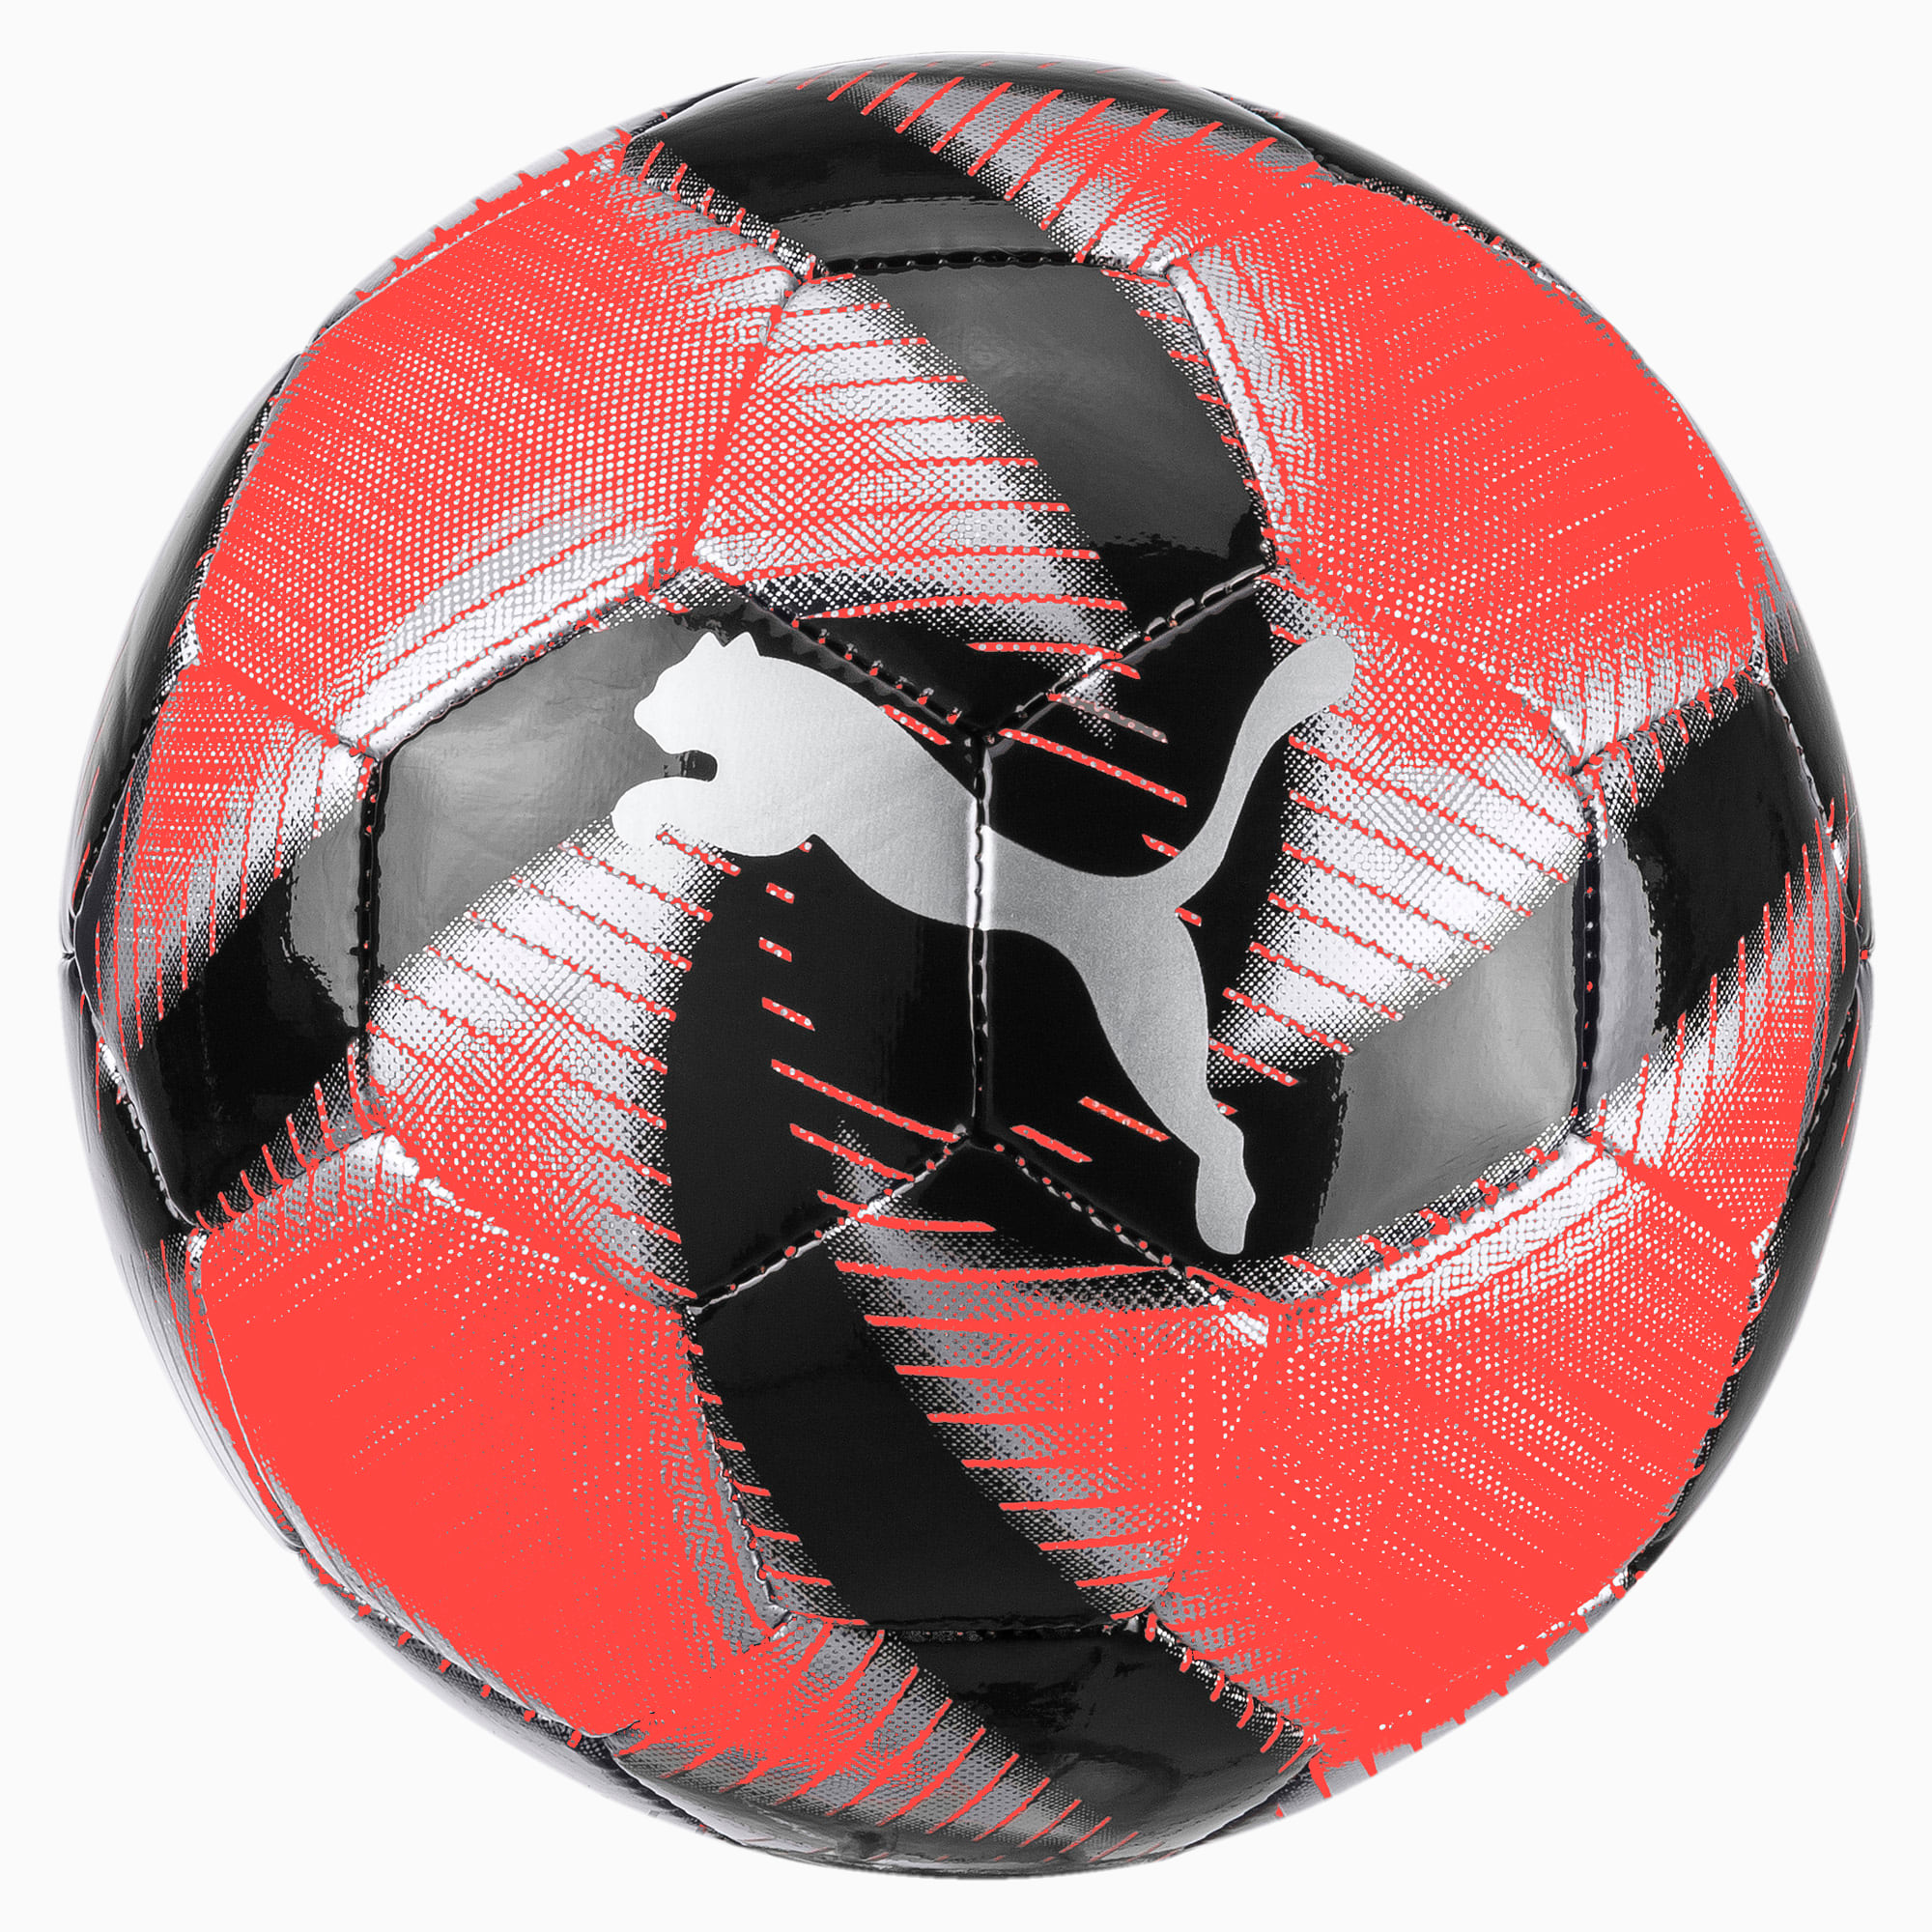 puma soccer ball size 4